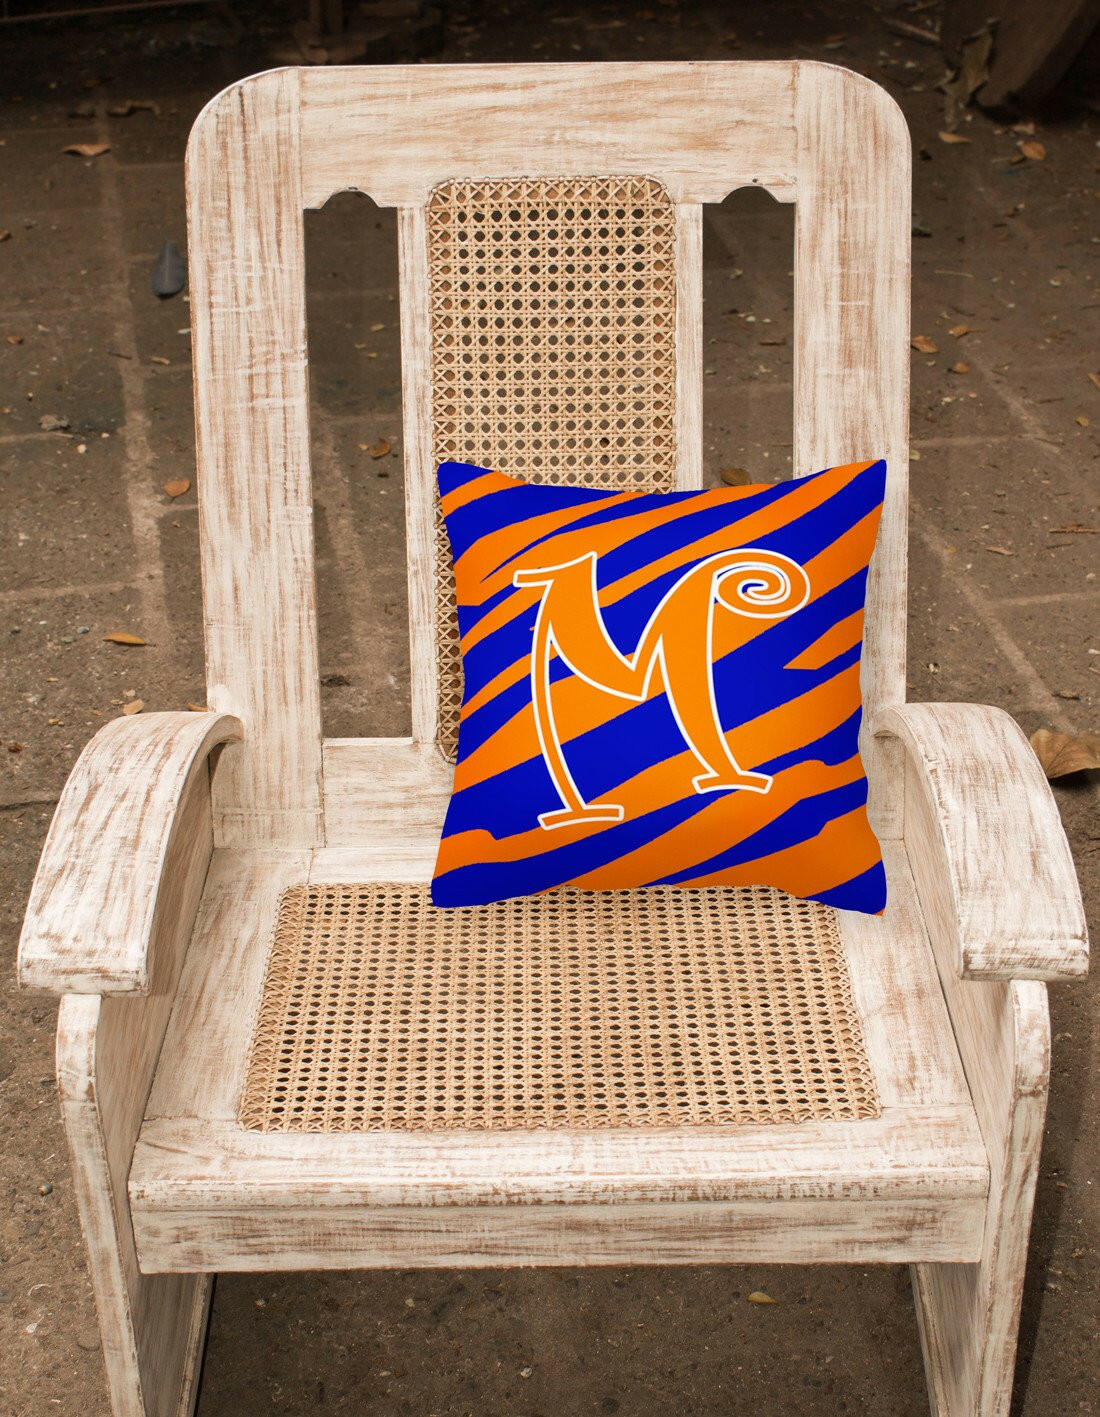 Monogram Initial M Tiger Stripe Blue and Orange Decorative Canvas Fabric Pillow - the-store.com